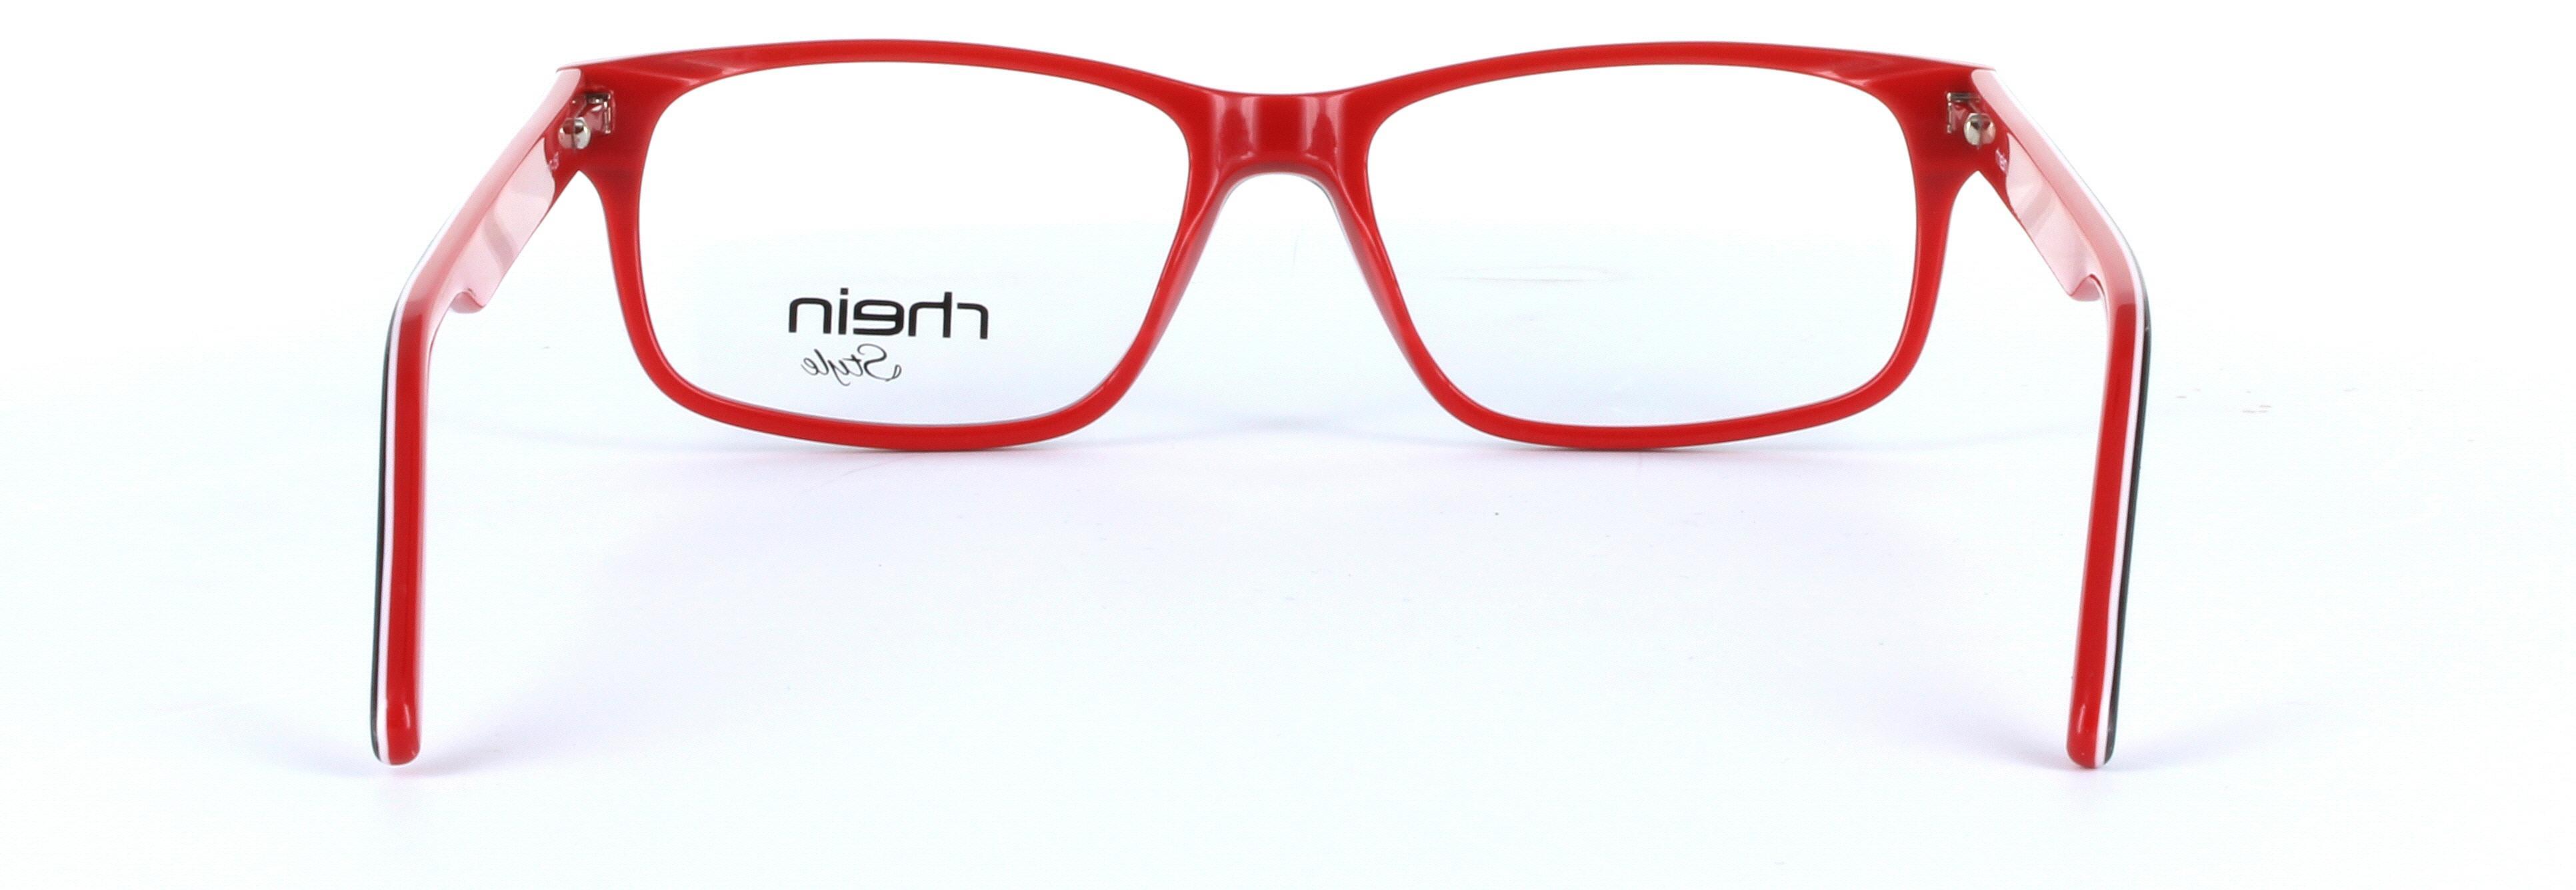 Carson Black and Red Full Rim Oval Rectangular Plastic Glasses - Image View 3